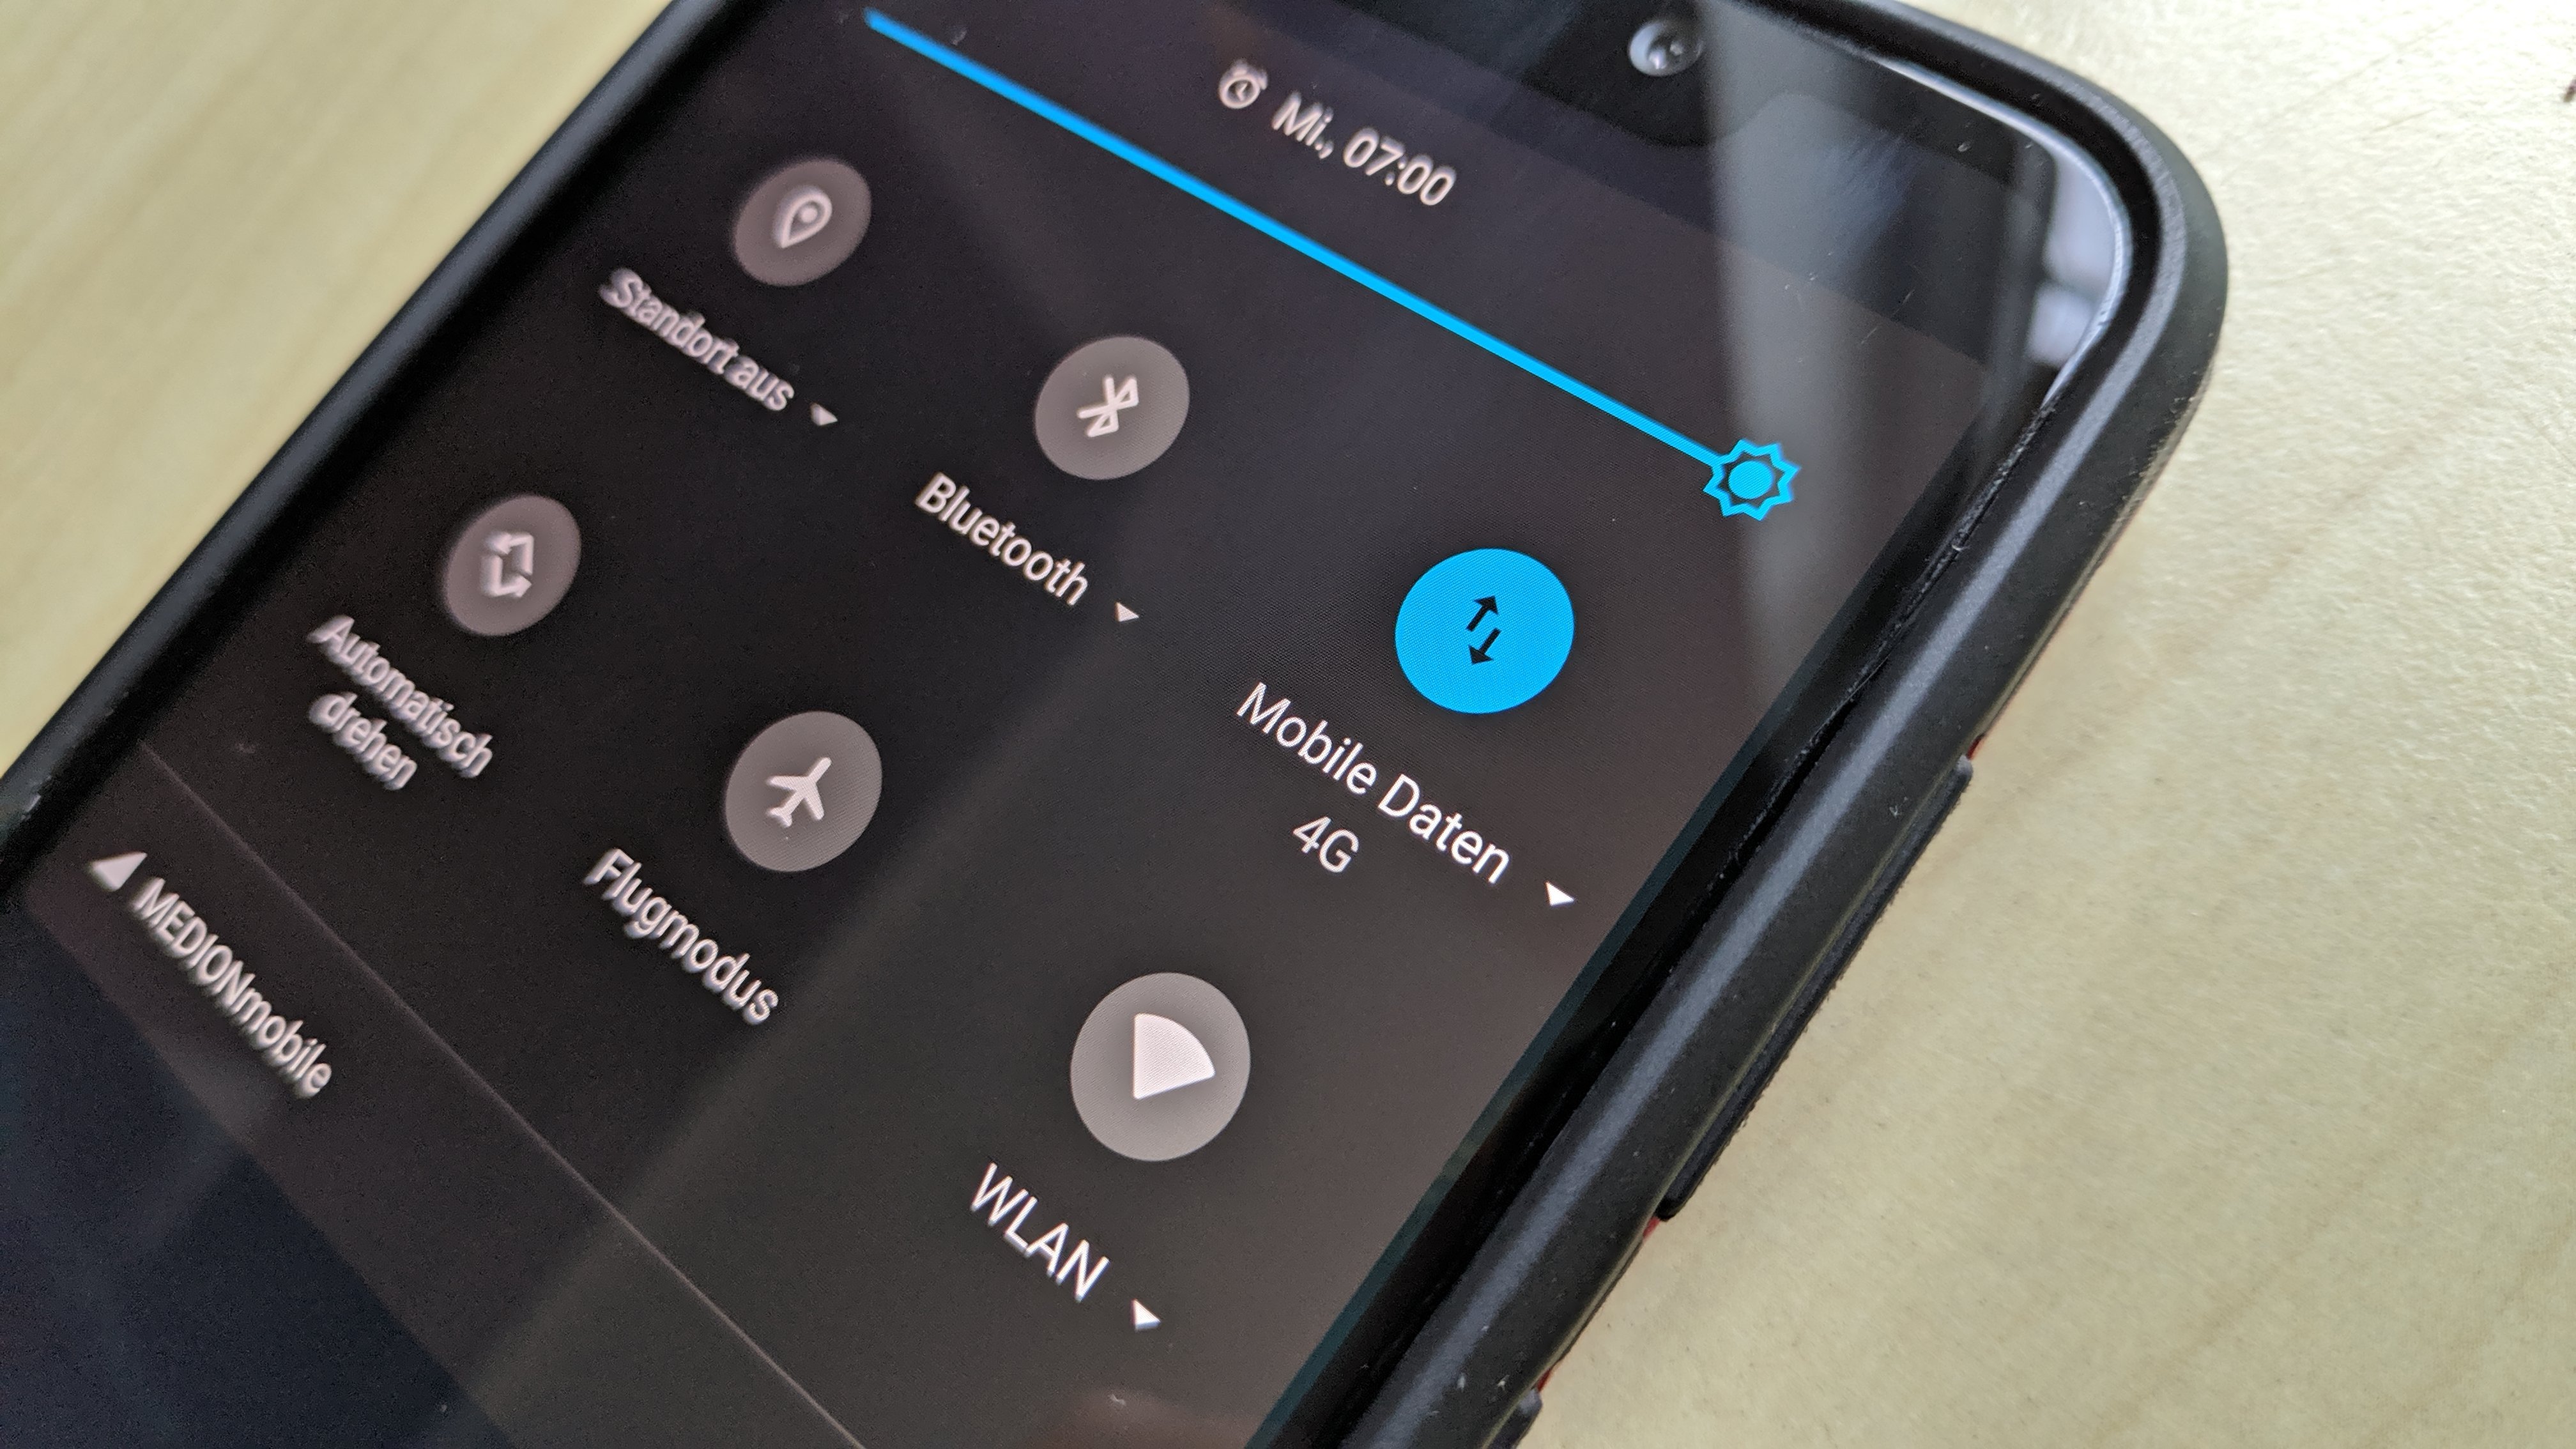 Mobilfunkverbindung unter Android über Hotspot oder Tethering teilen